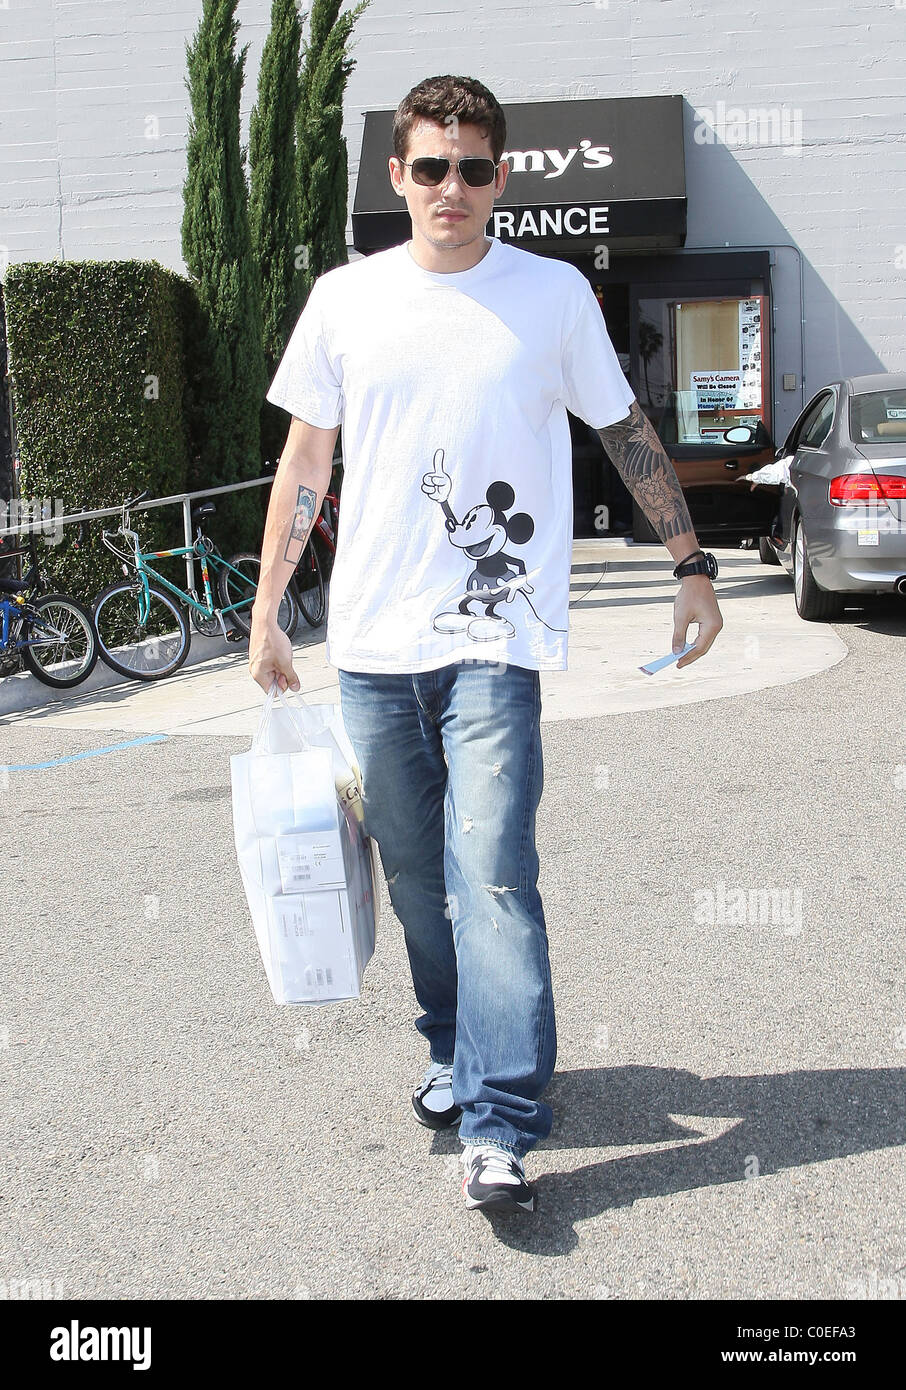 John Mayer wearing a Mickey Mouse print shirt, buys some camera equipment  at Samy's camera Los Angeles, California - 20.05.08 Stock Photo - Alamy